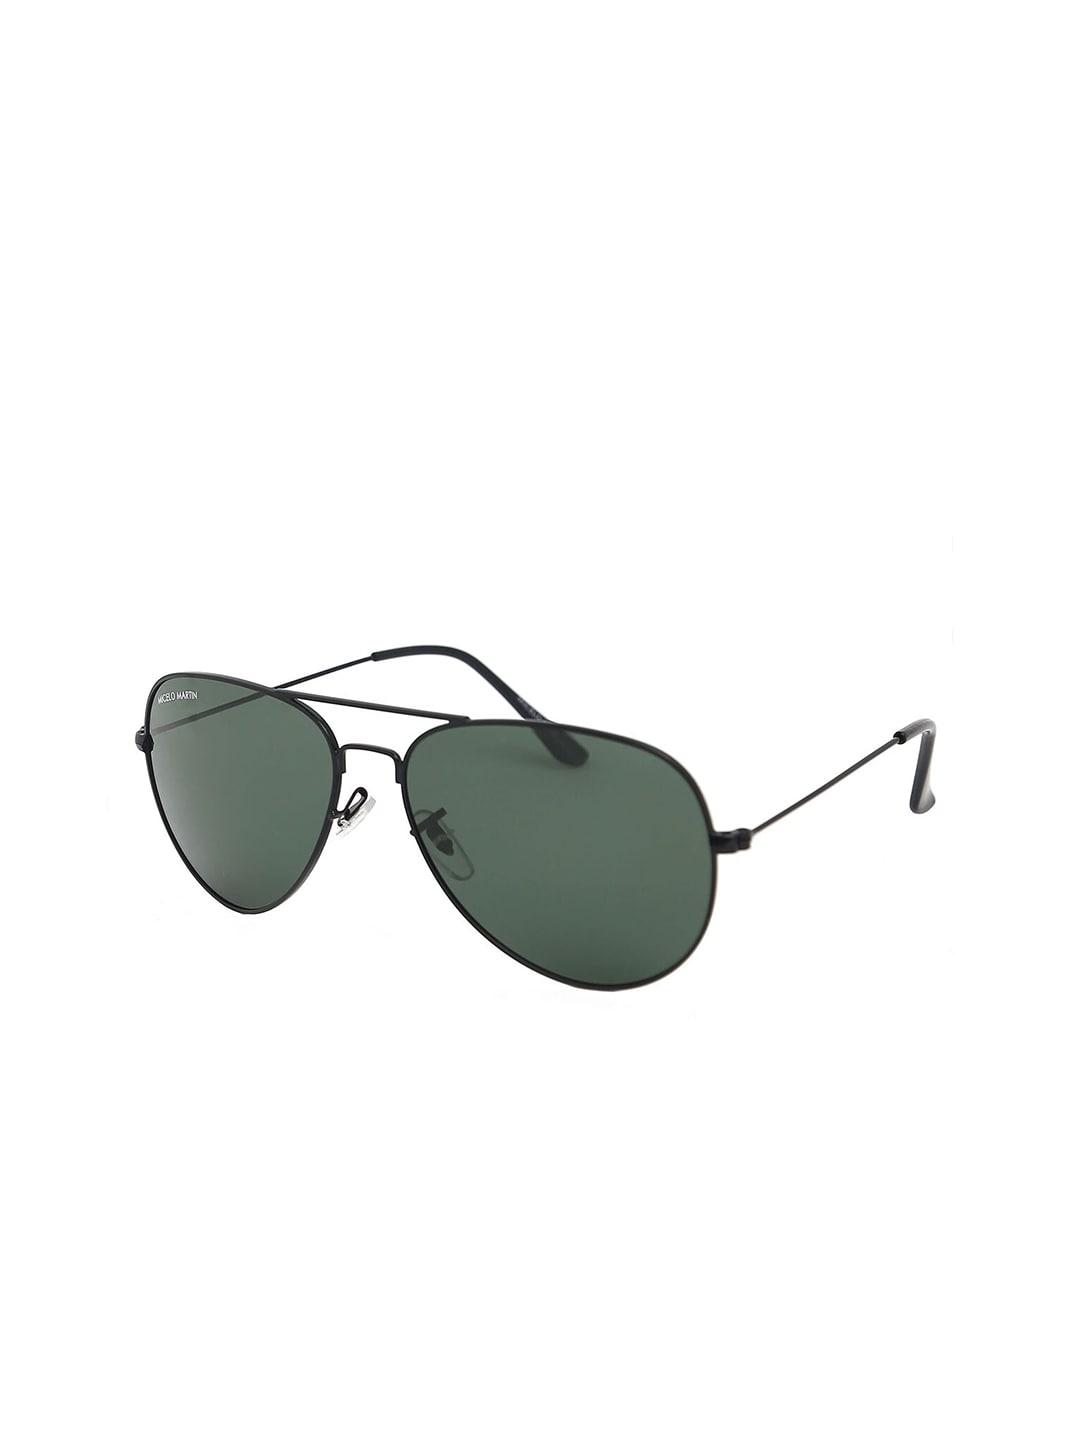 Micelo Martin Unisex Green Lens & Black Aviator Sunglasses with UV Protected Lens